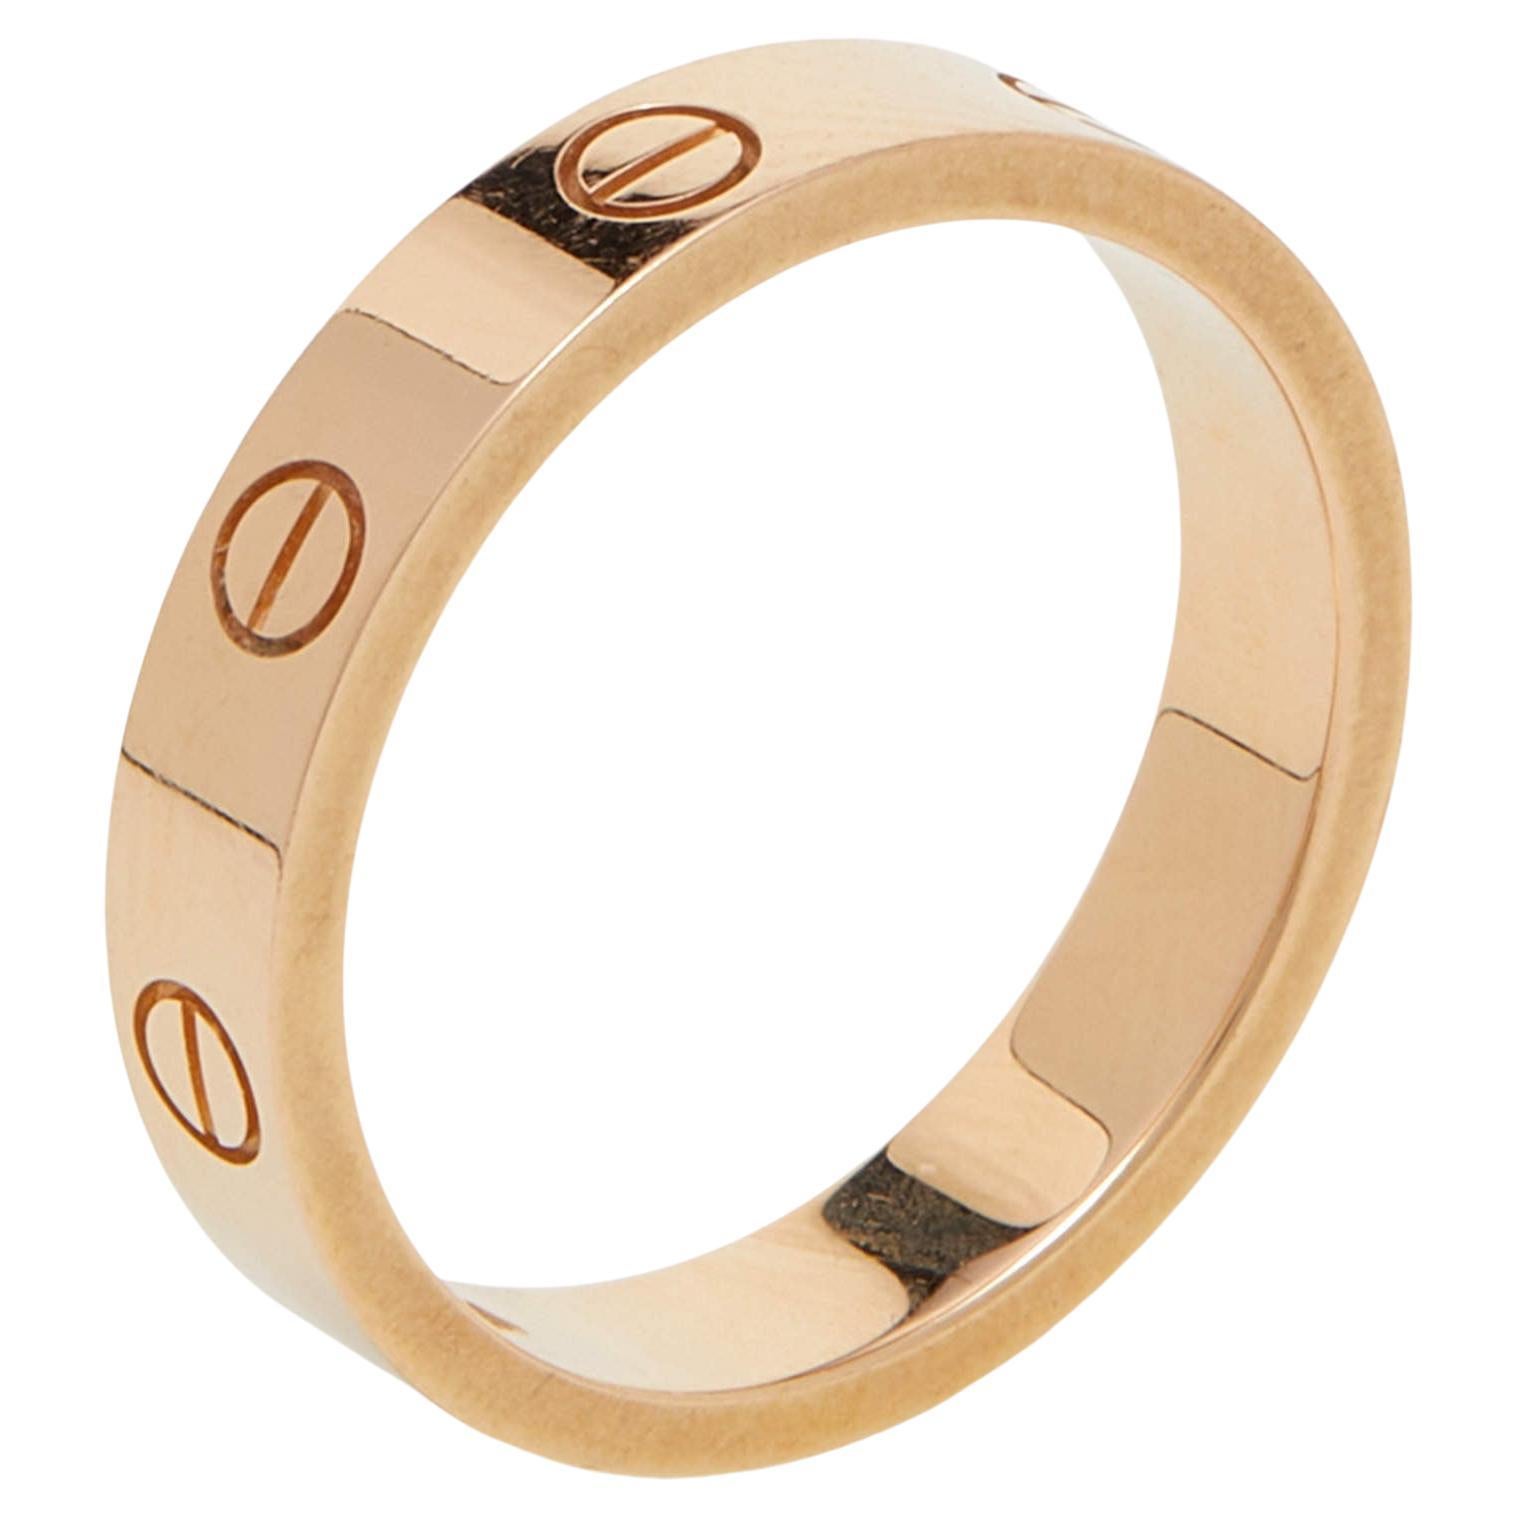 Cartier Love 1 Diamond 18k Rose Gold Wedding Band Ring Size 55